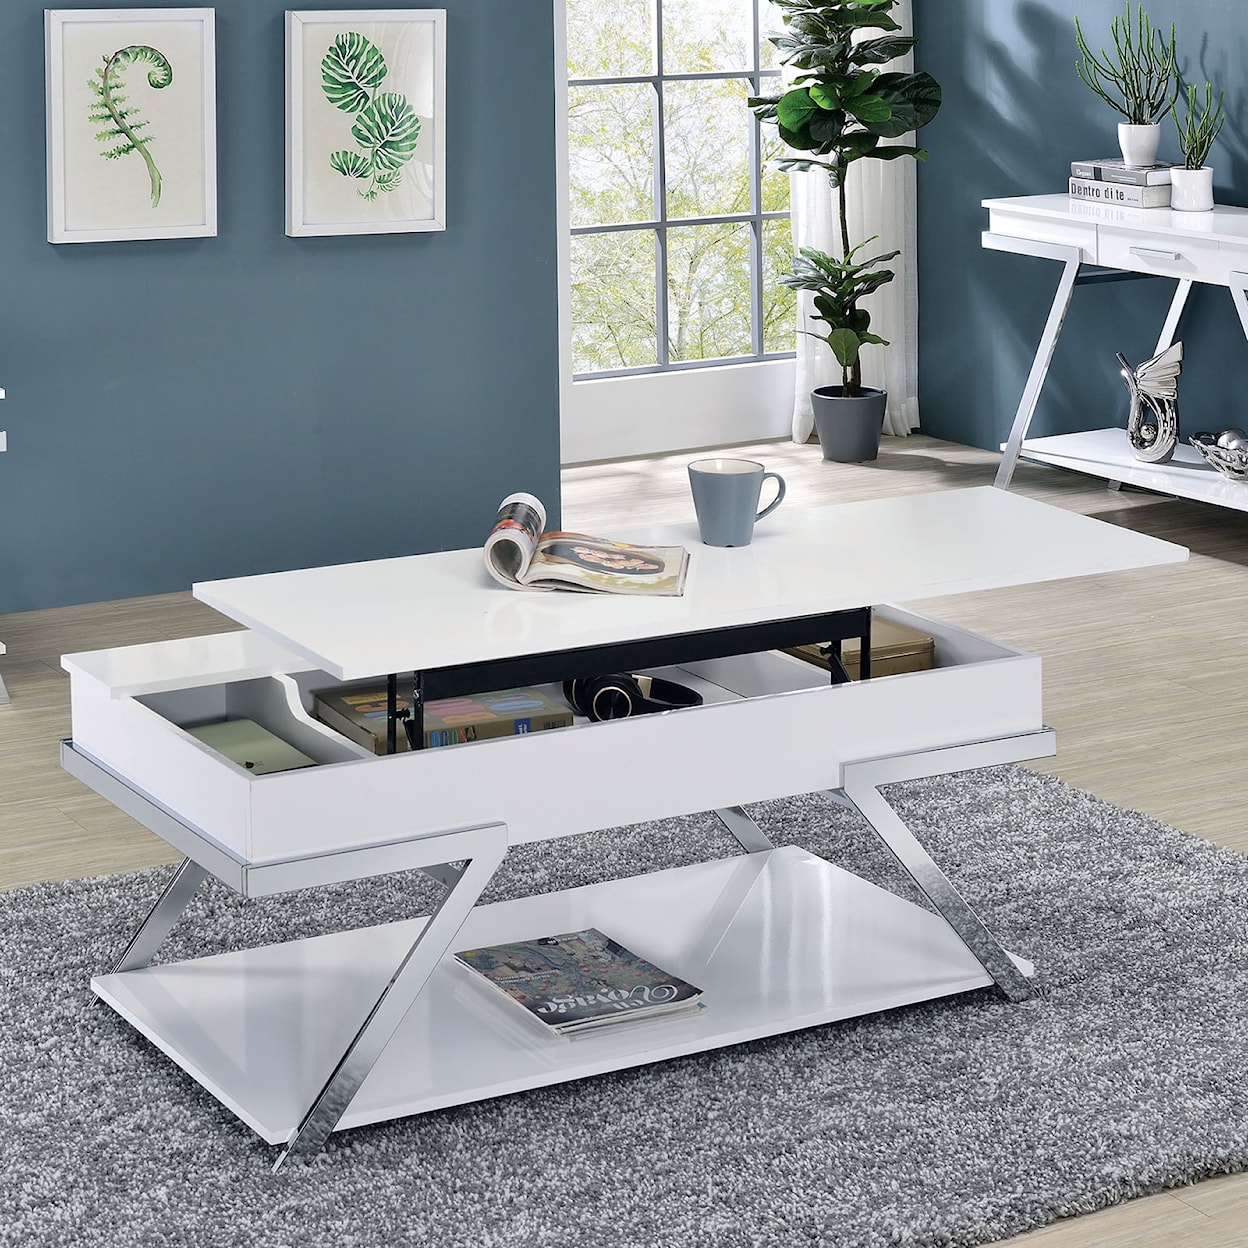 Furniture of America TITUS Coffee Table, White/Chrome